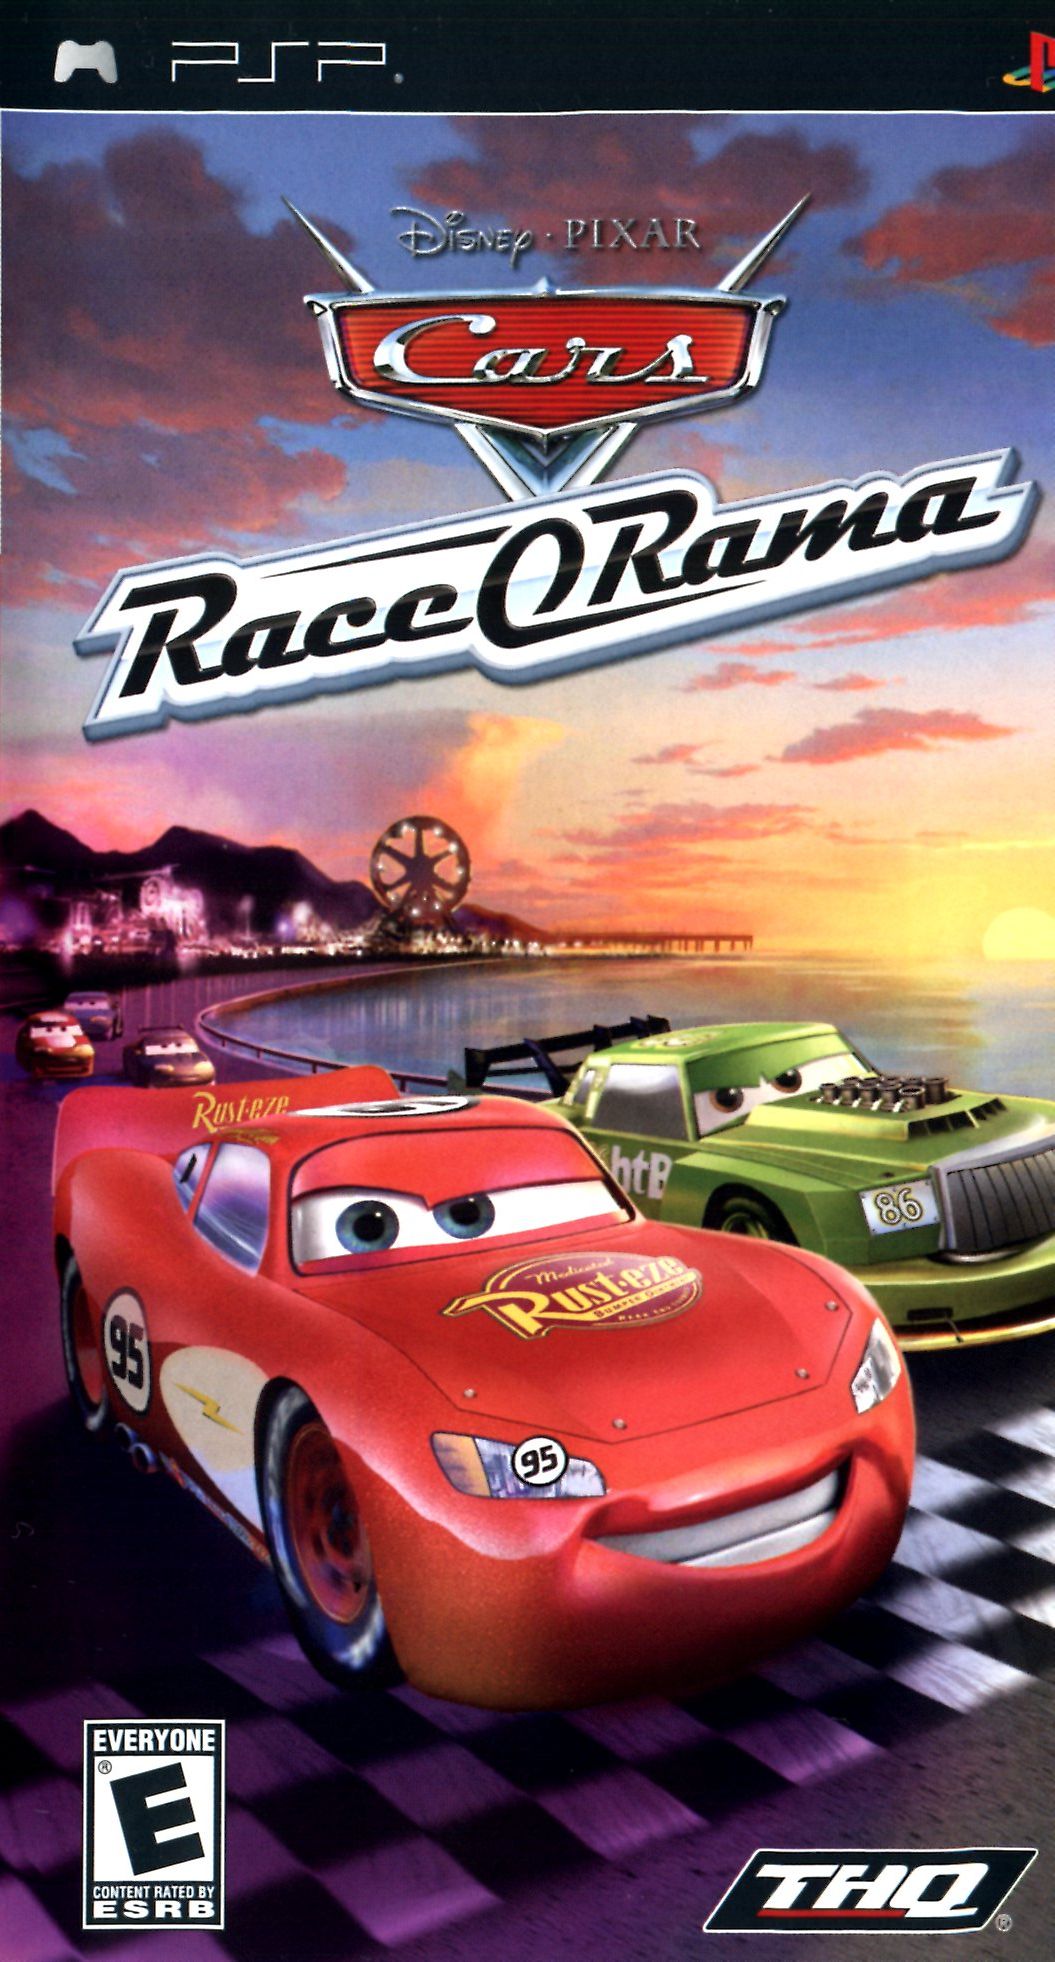  Disney's Cars Race O Rama - Sony PSP : Video Games